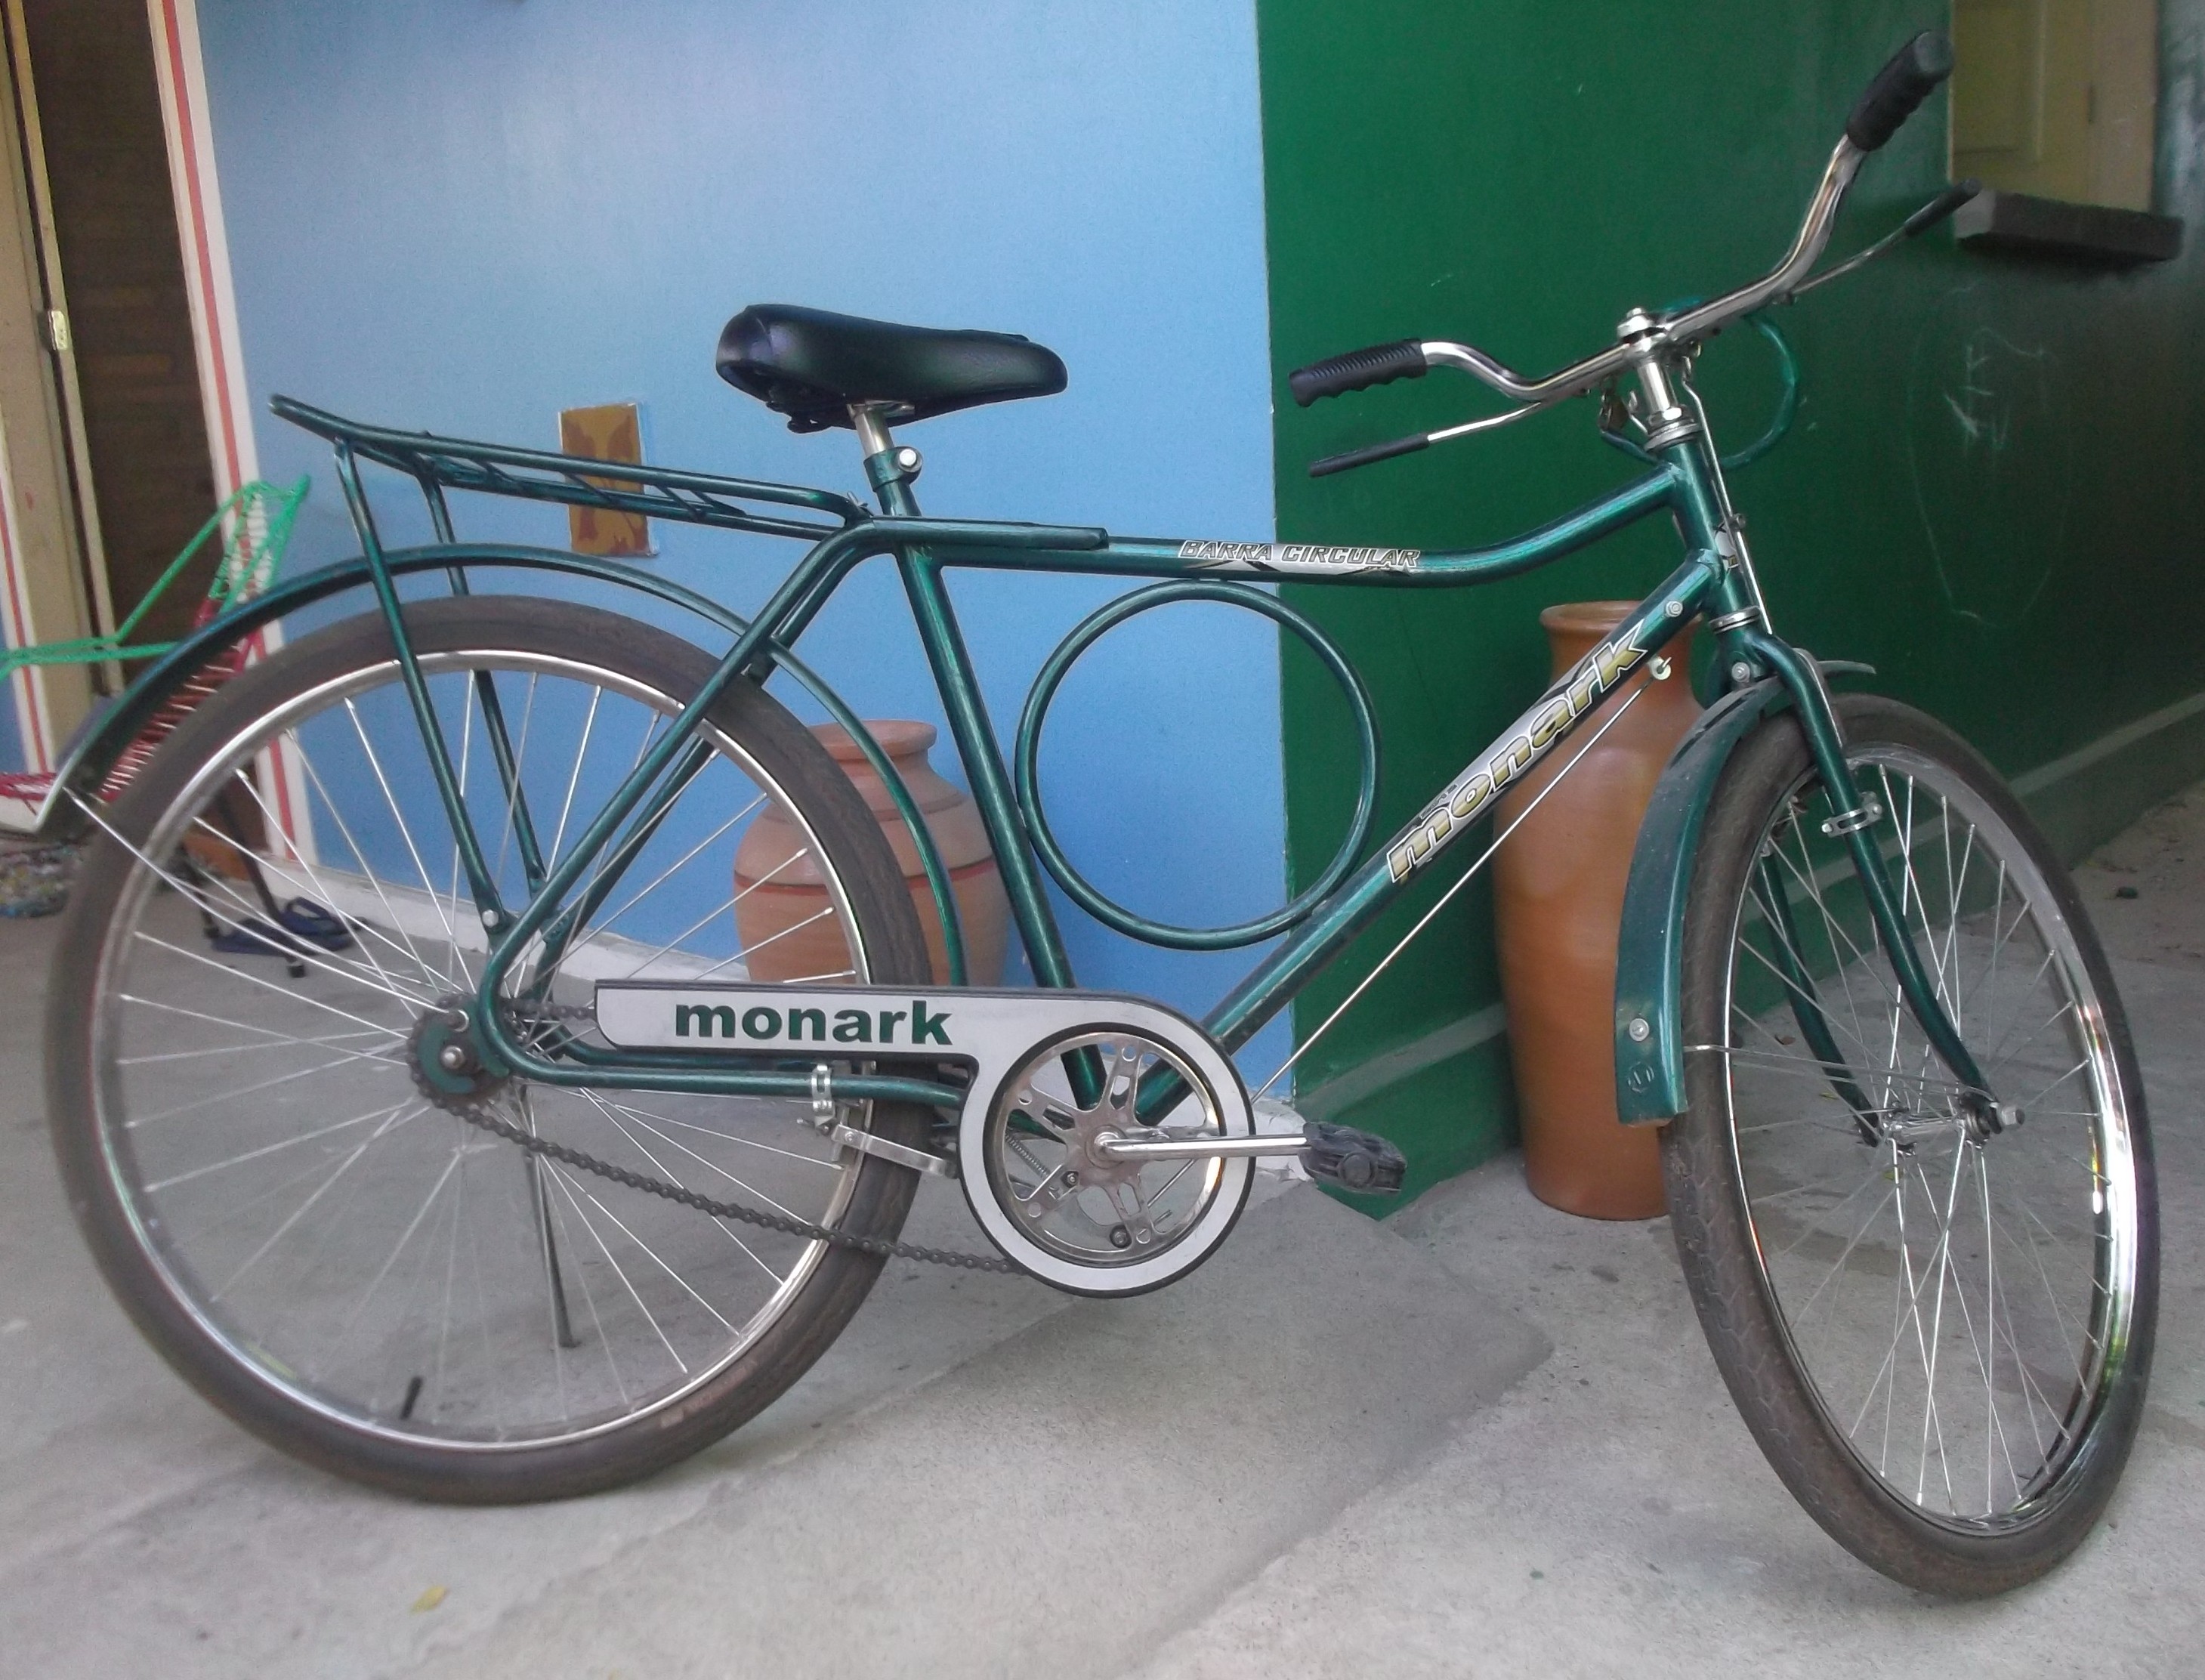 File:Bicicleta Monark barra circular 2012.JPG - Wikimedia Commons